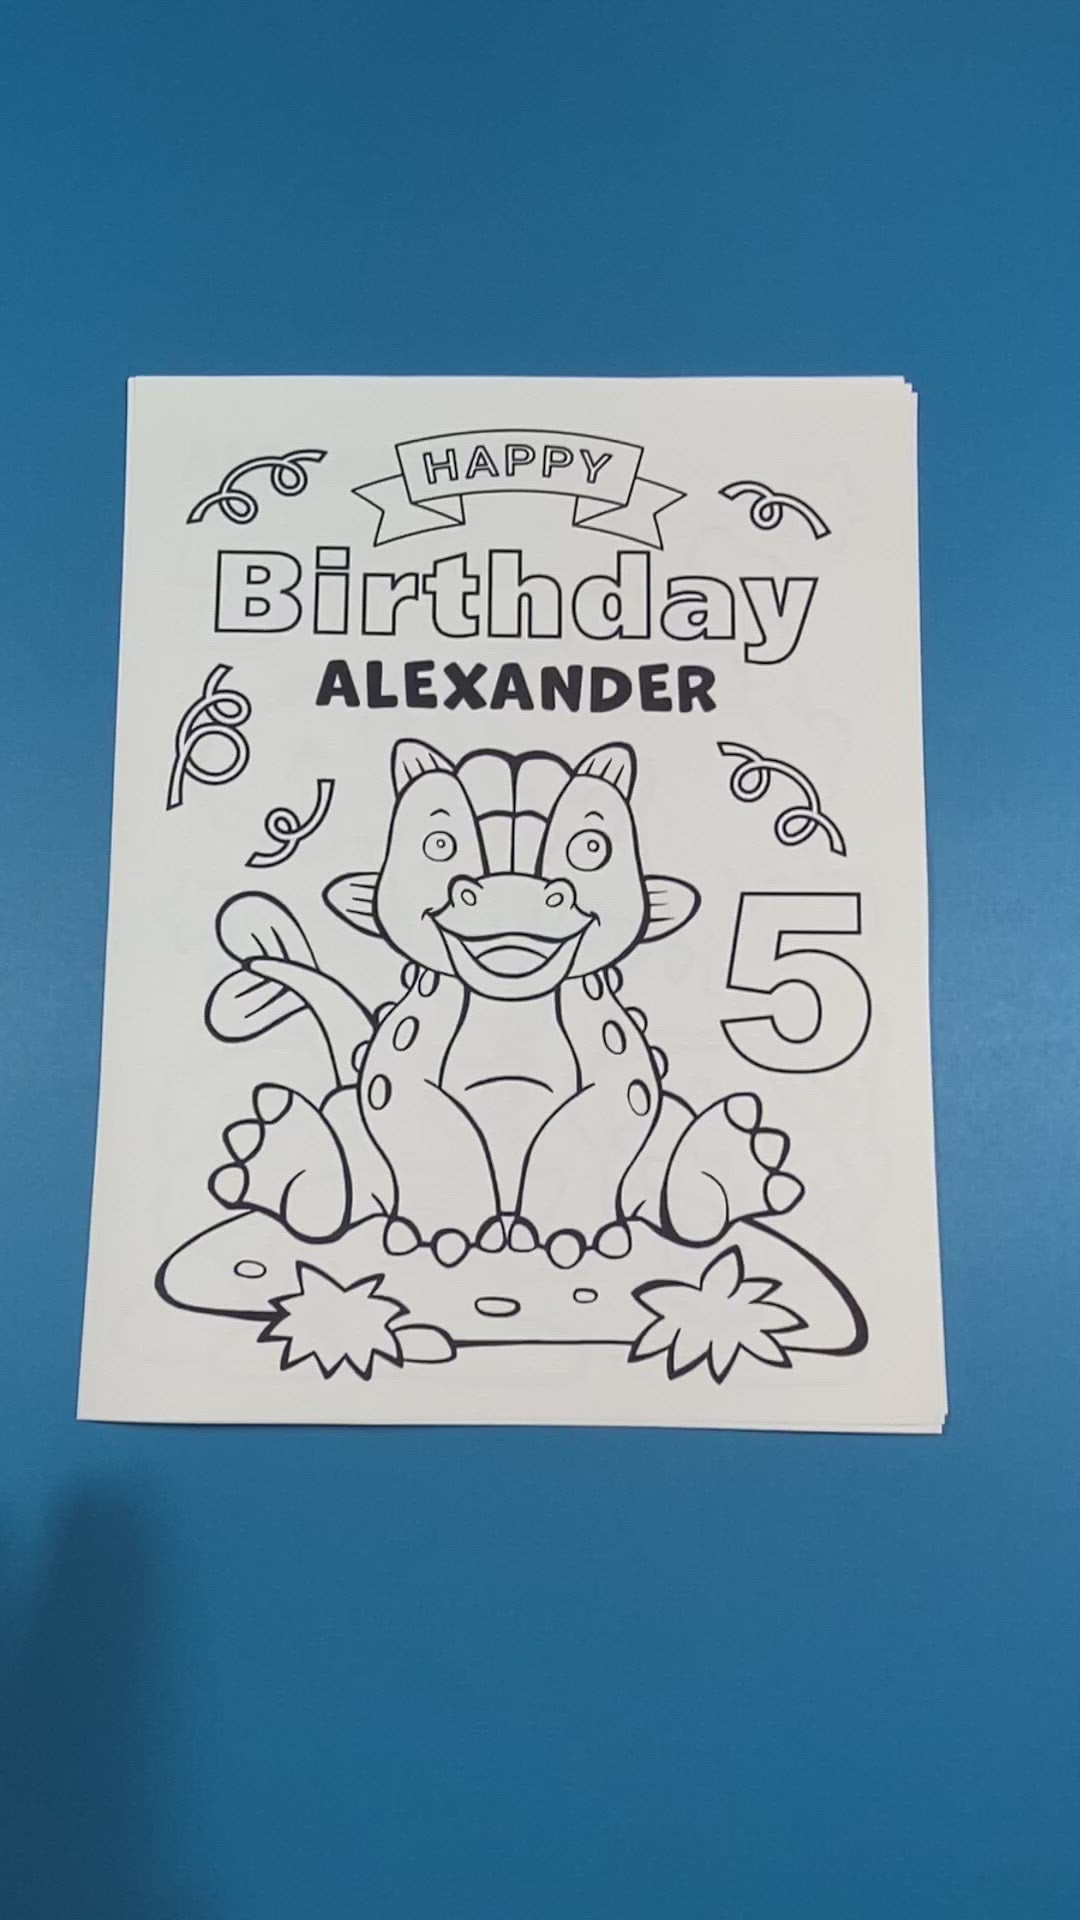 Dinosaur Custom Birthday Activity Pages